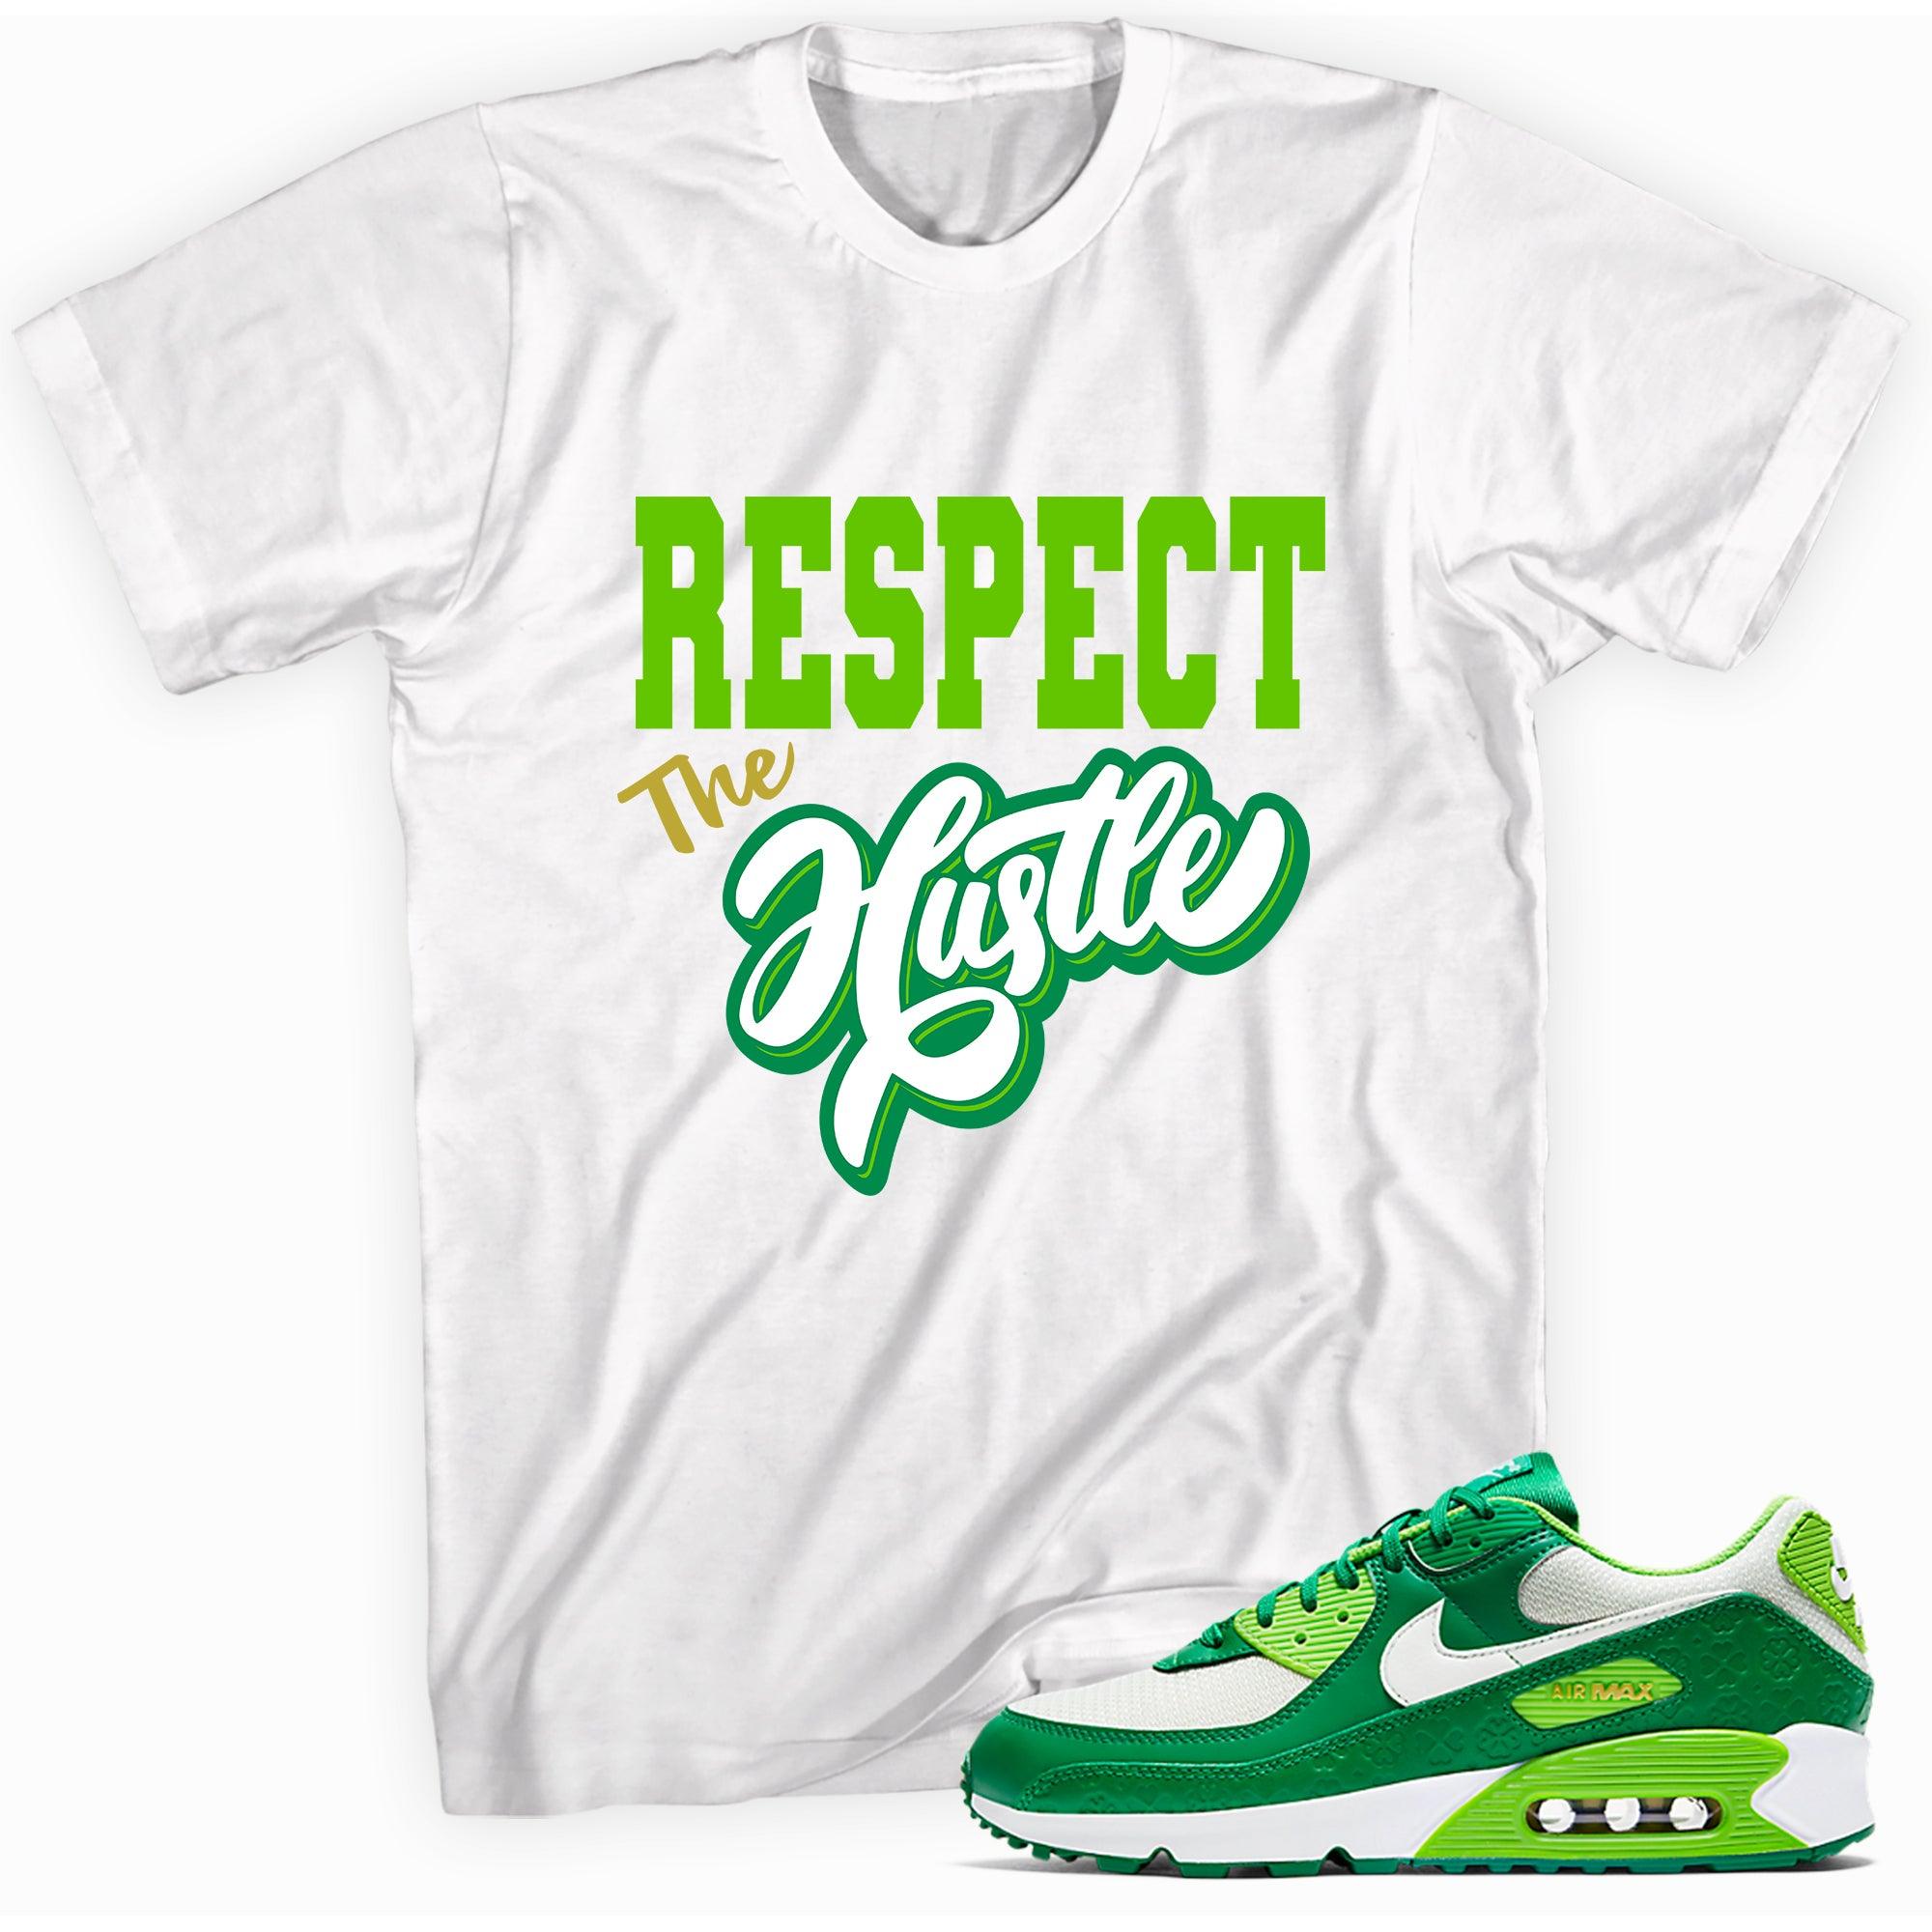 Respect The Hustle Shirt Nike Air Max 90 St Patricks Day 2021 photo